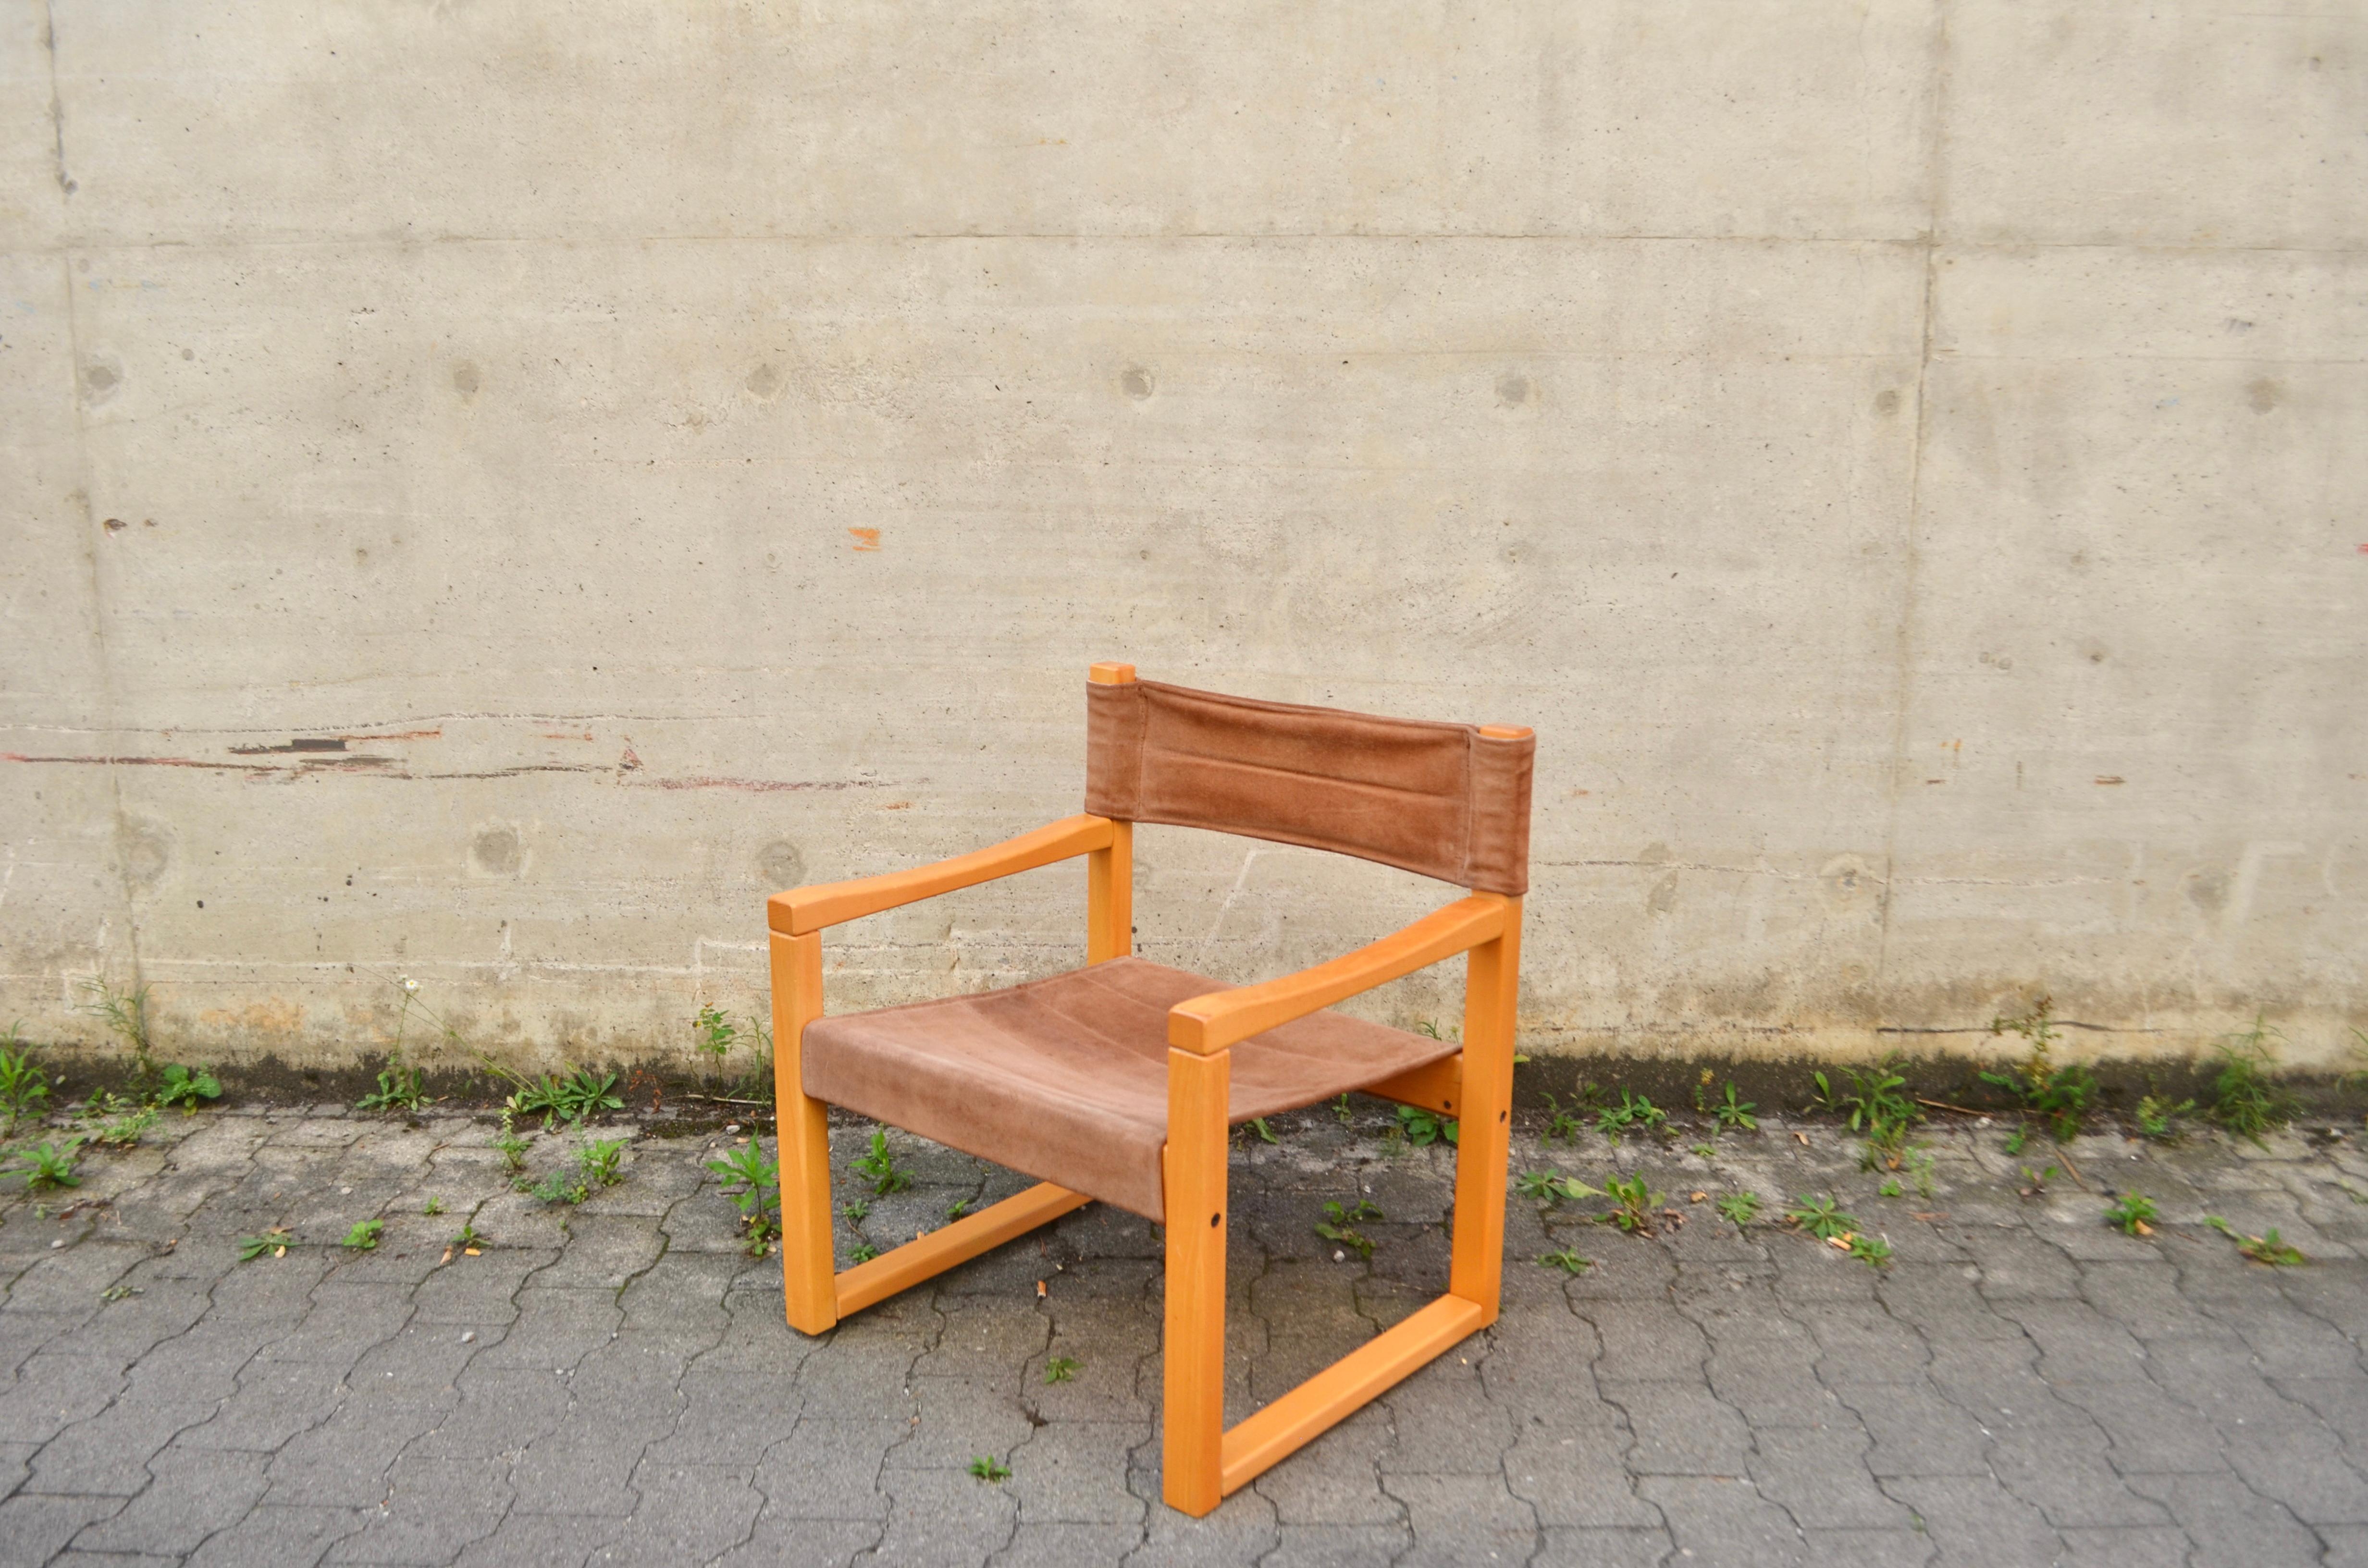 Cuir Karin Mobring Modèle Diana Brown Cognac Sling Lounge Chair Vintage Ikea, 1 de 2 en vente